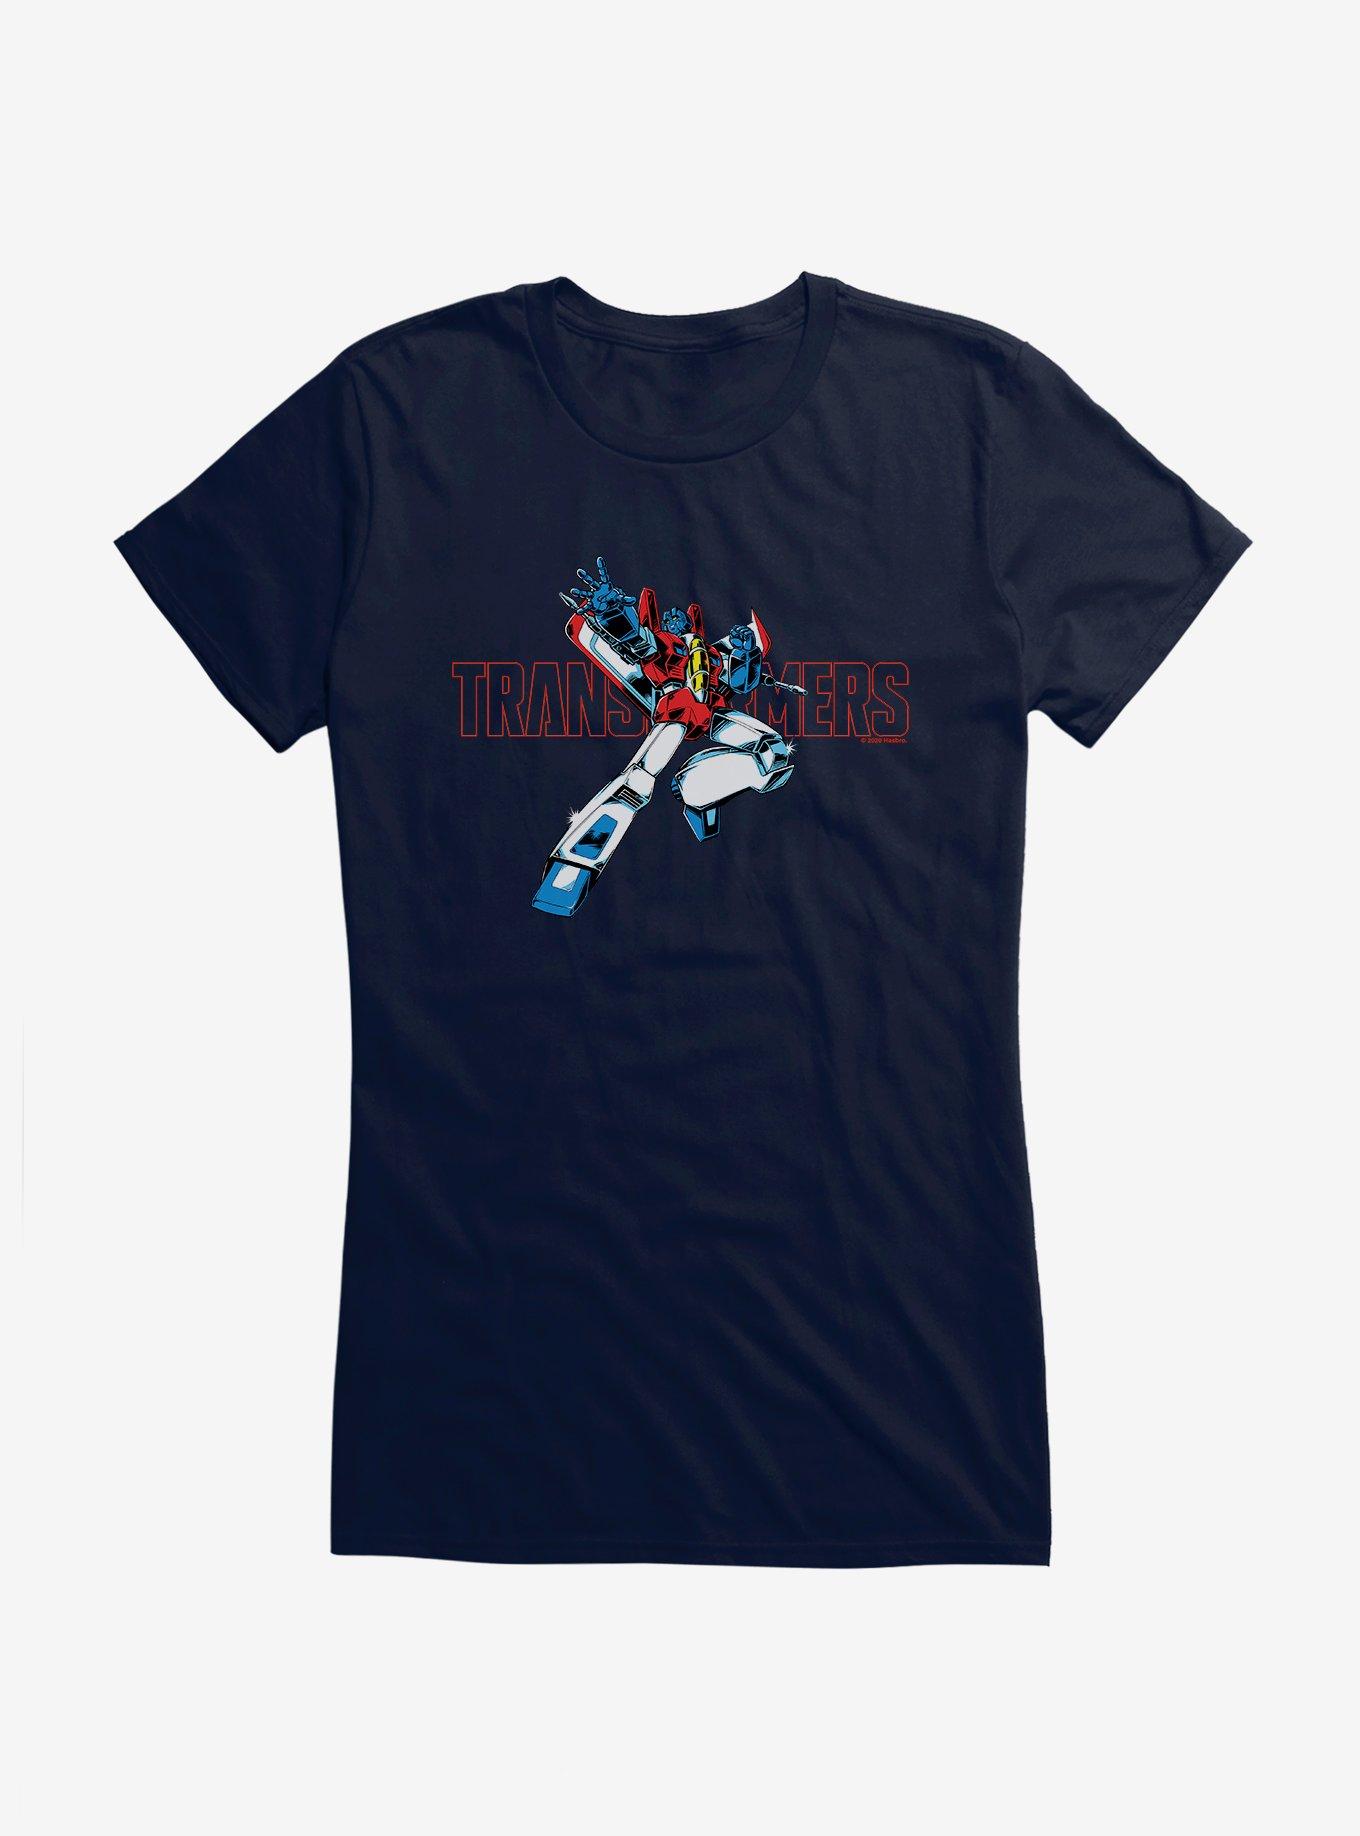 Transformers Starscream The Decepticon Girls T-Shirt, , hi-res